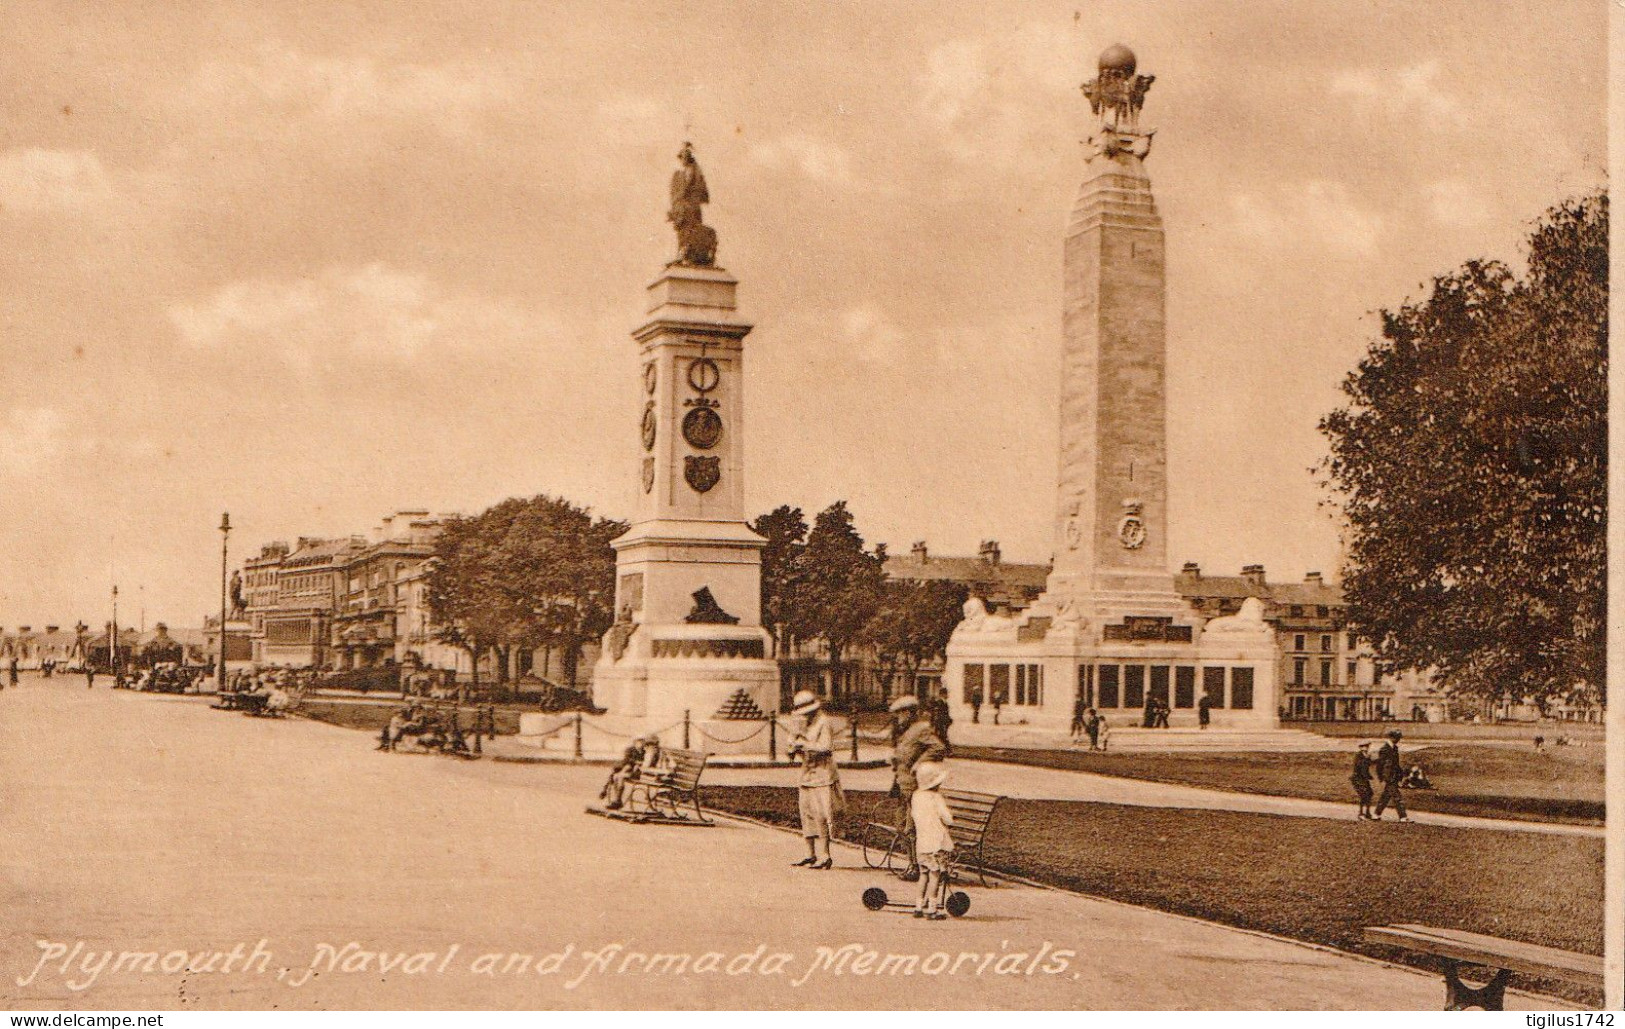 Plymouth Naval And Armada Memorials - Plymouth